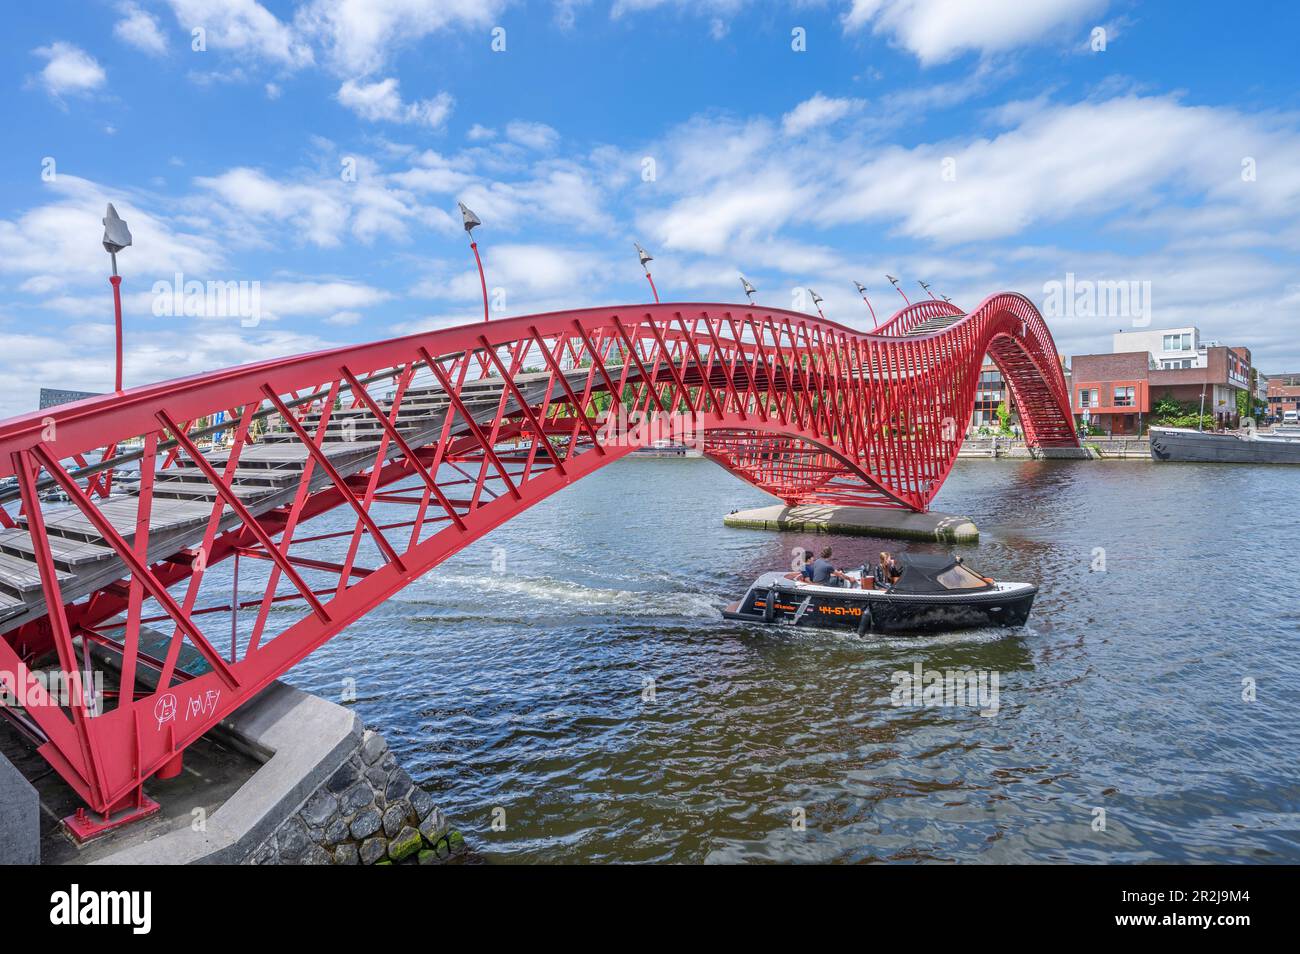 Pont Python (Pythonbrug), Sporenburg et Borneo Island, Amsterdam, Benelux, pays du Benelux, pays du Nord de la Hollande, Noord-Hollande, pays-Bas Banque D'Images